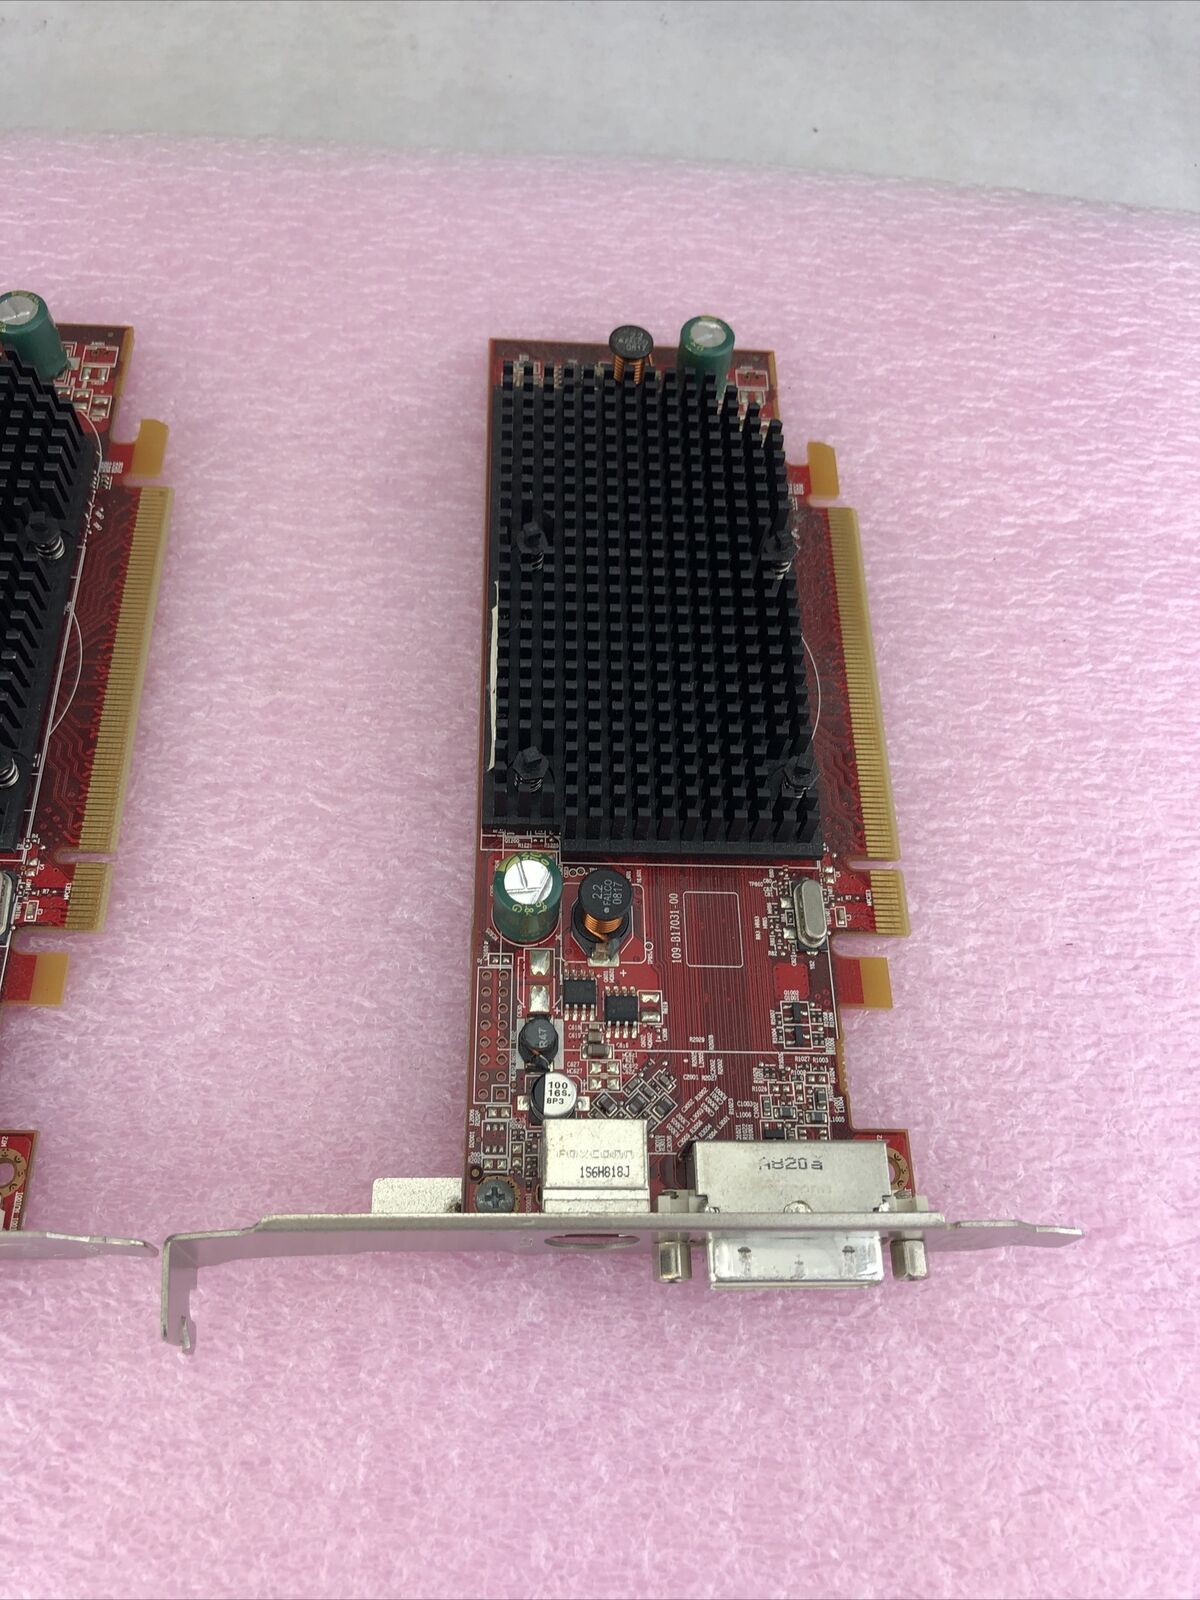 Lot of 2 AMD Radeon ATI-102-B170 HD 2400 Full Profile GPU DVI Port Video Card